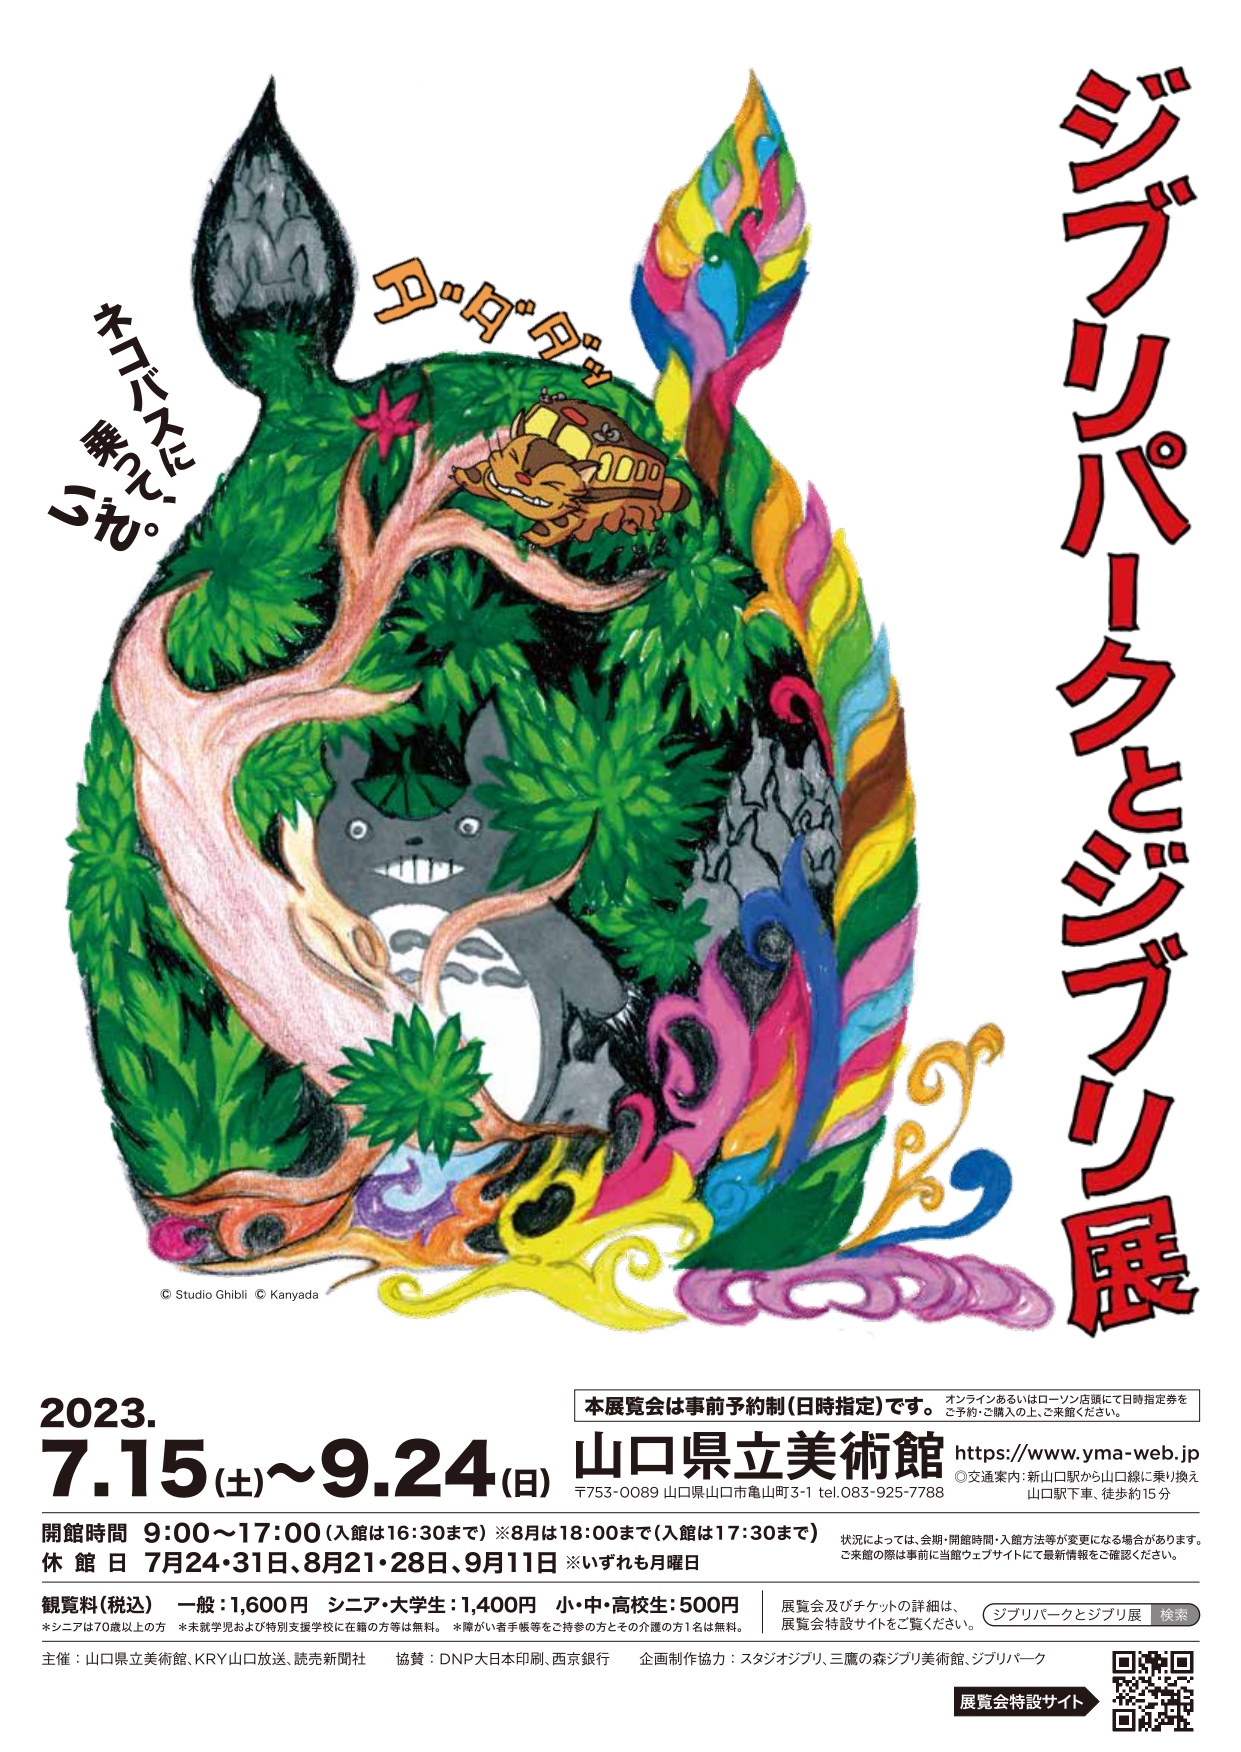 Ghibli Park and Ghibli Exhibition Yamaguchi Prefectural Art